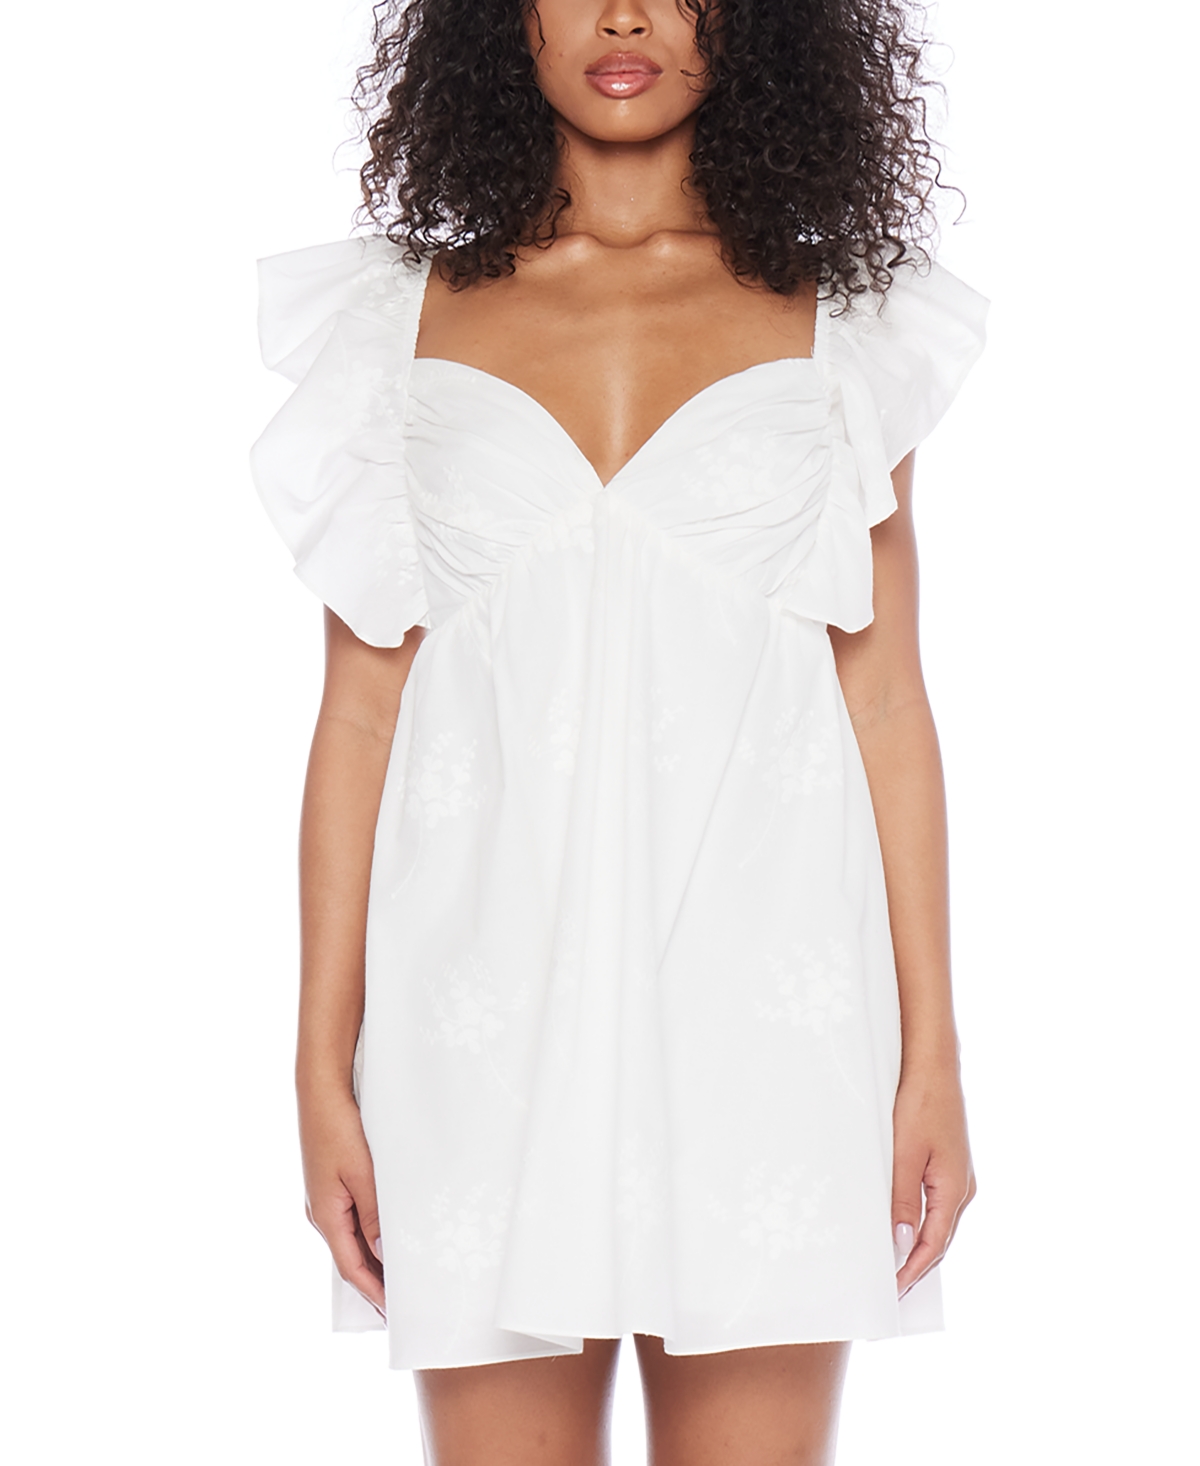 Juniors' Ruffled Floral Print Cotton A-Line Dress - White